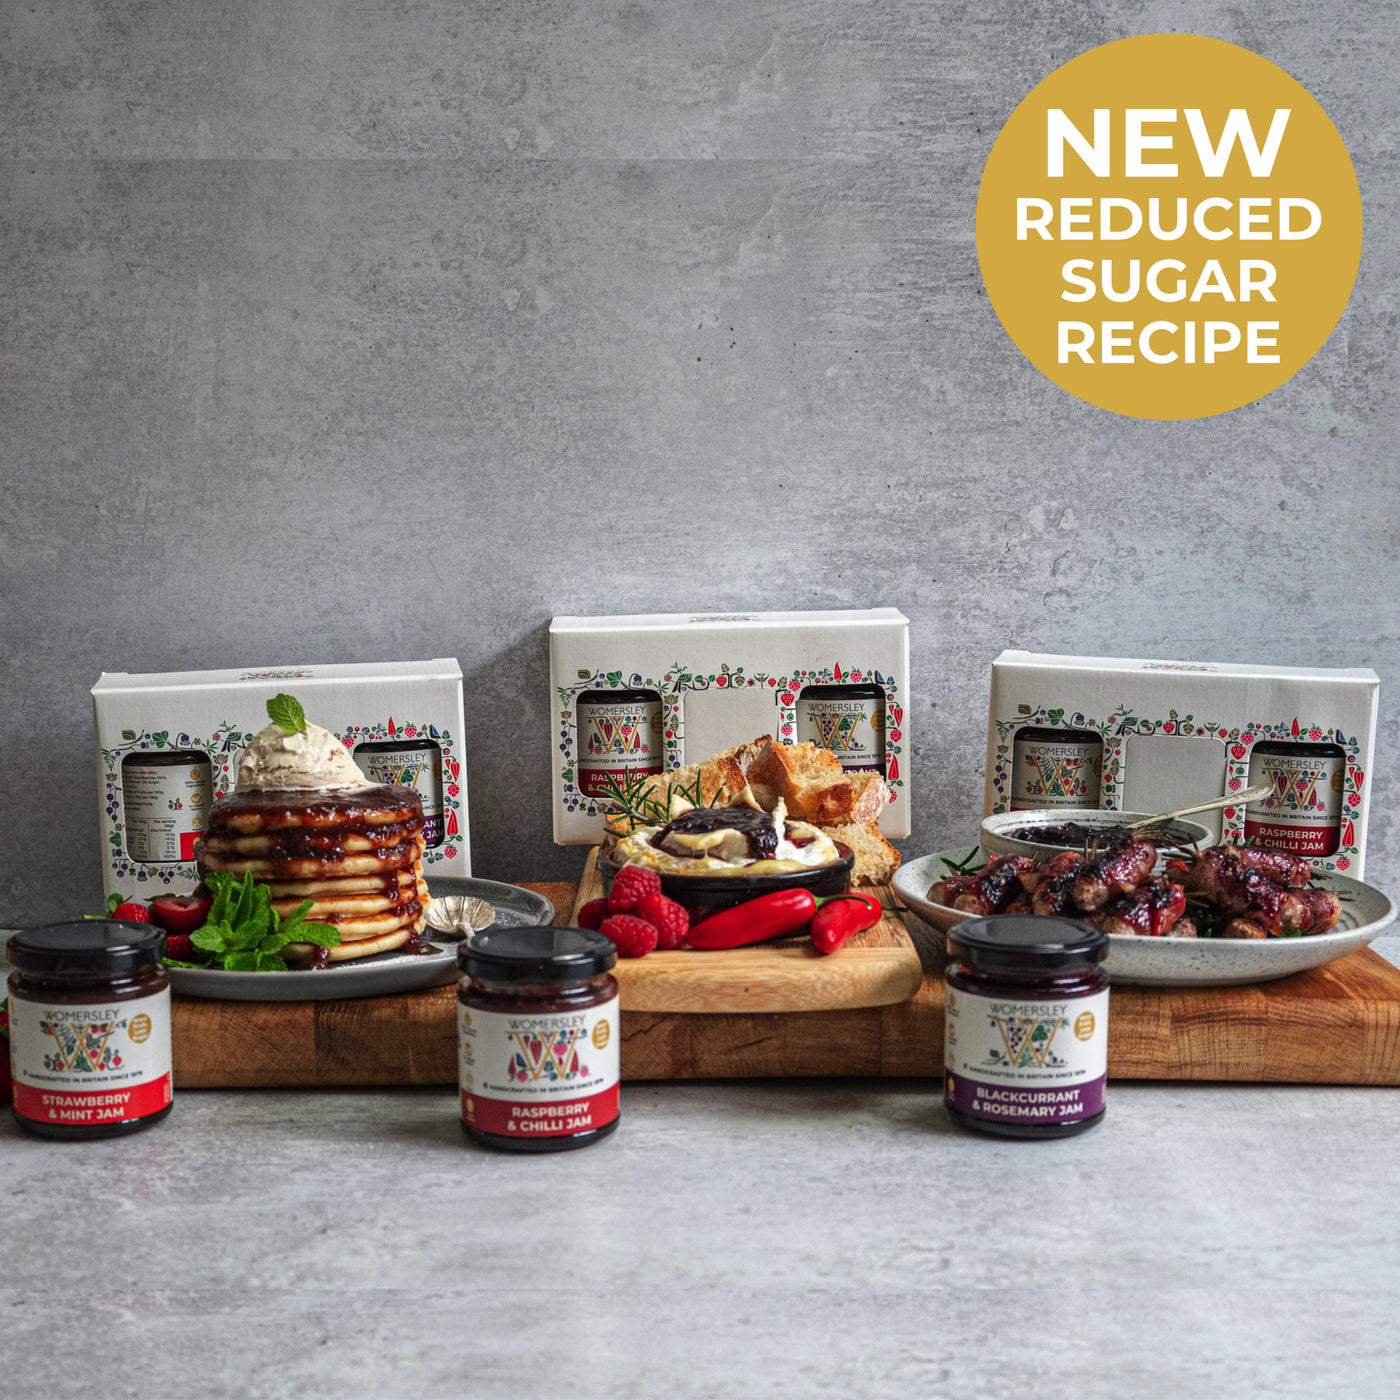 Gourmet Luxury Fruit Jams Gift Box - More Fruit, Less Sugar Jams